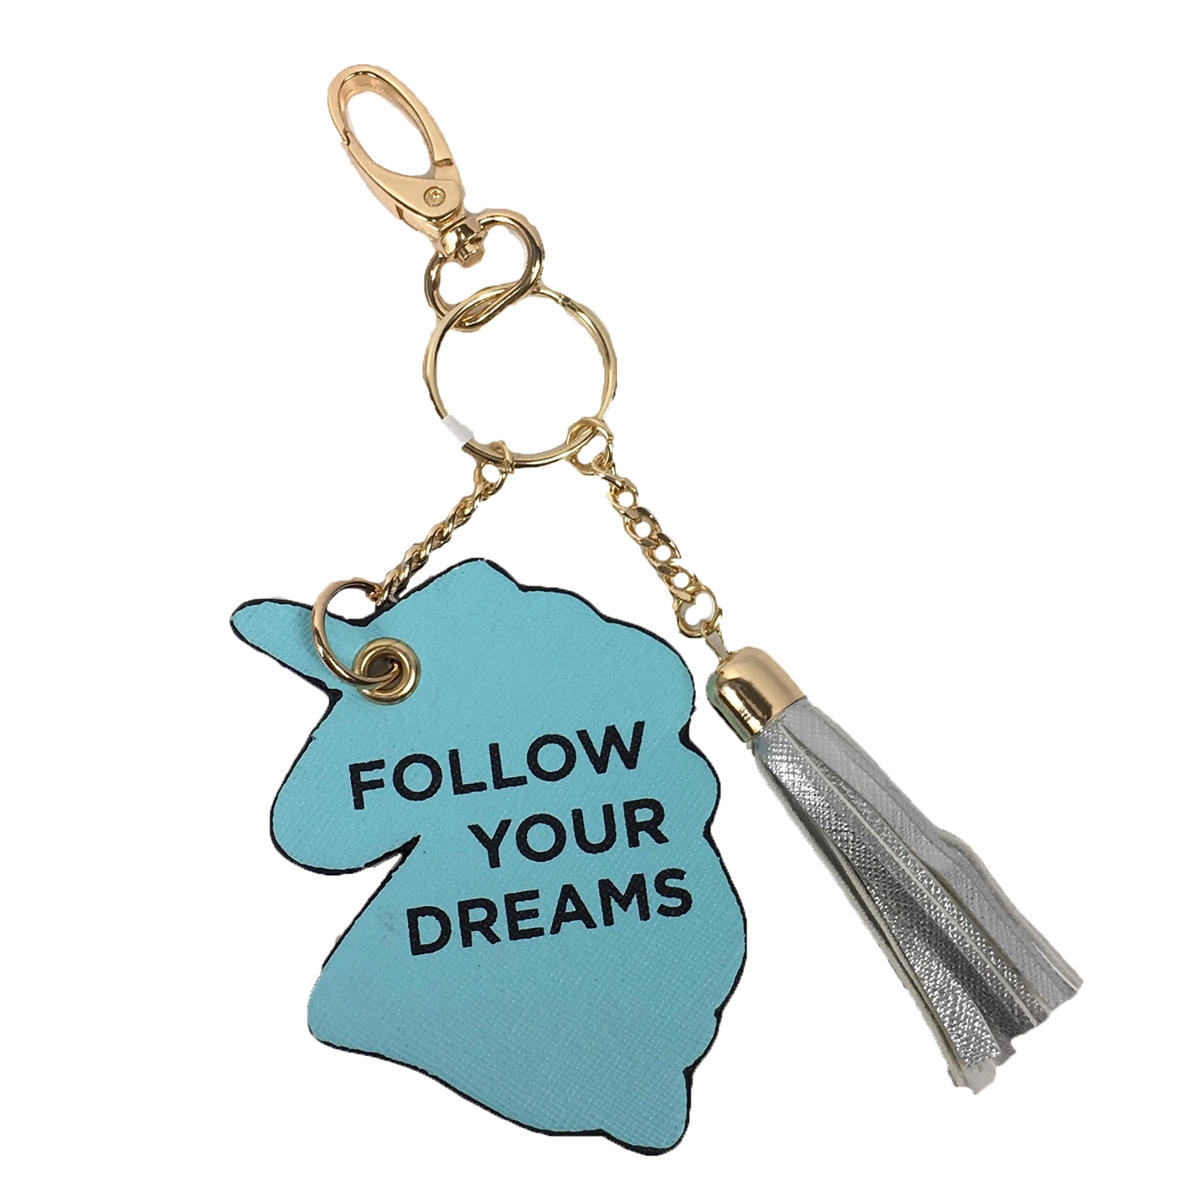 Under One Sky 'Follow Your Dreams' Unicorn Key Chain Purse Charm